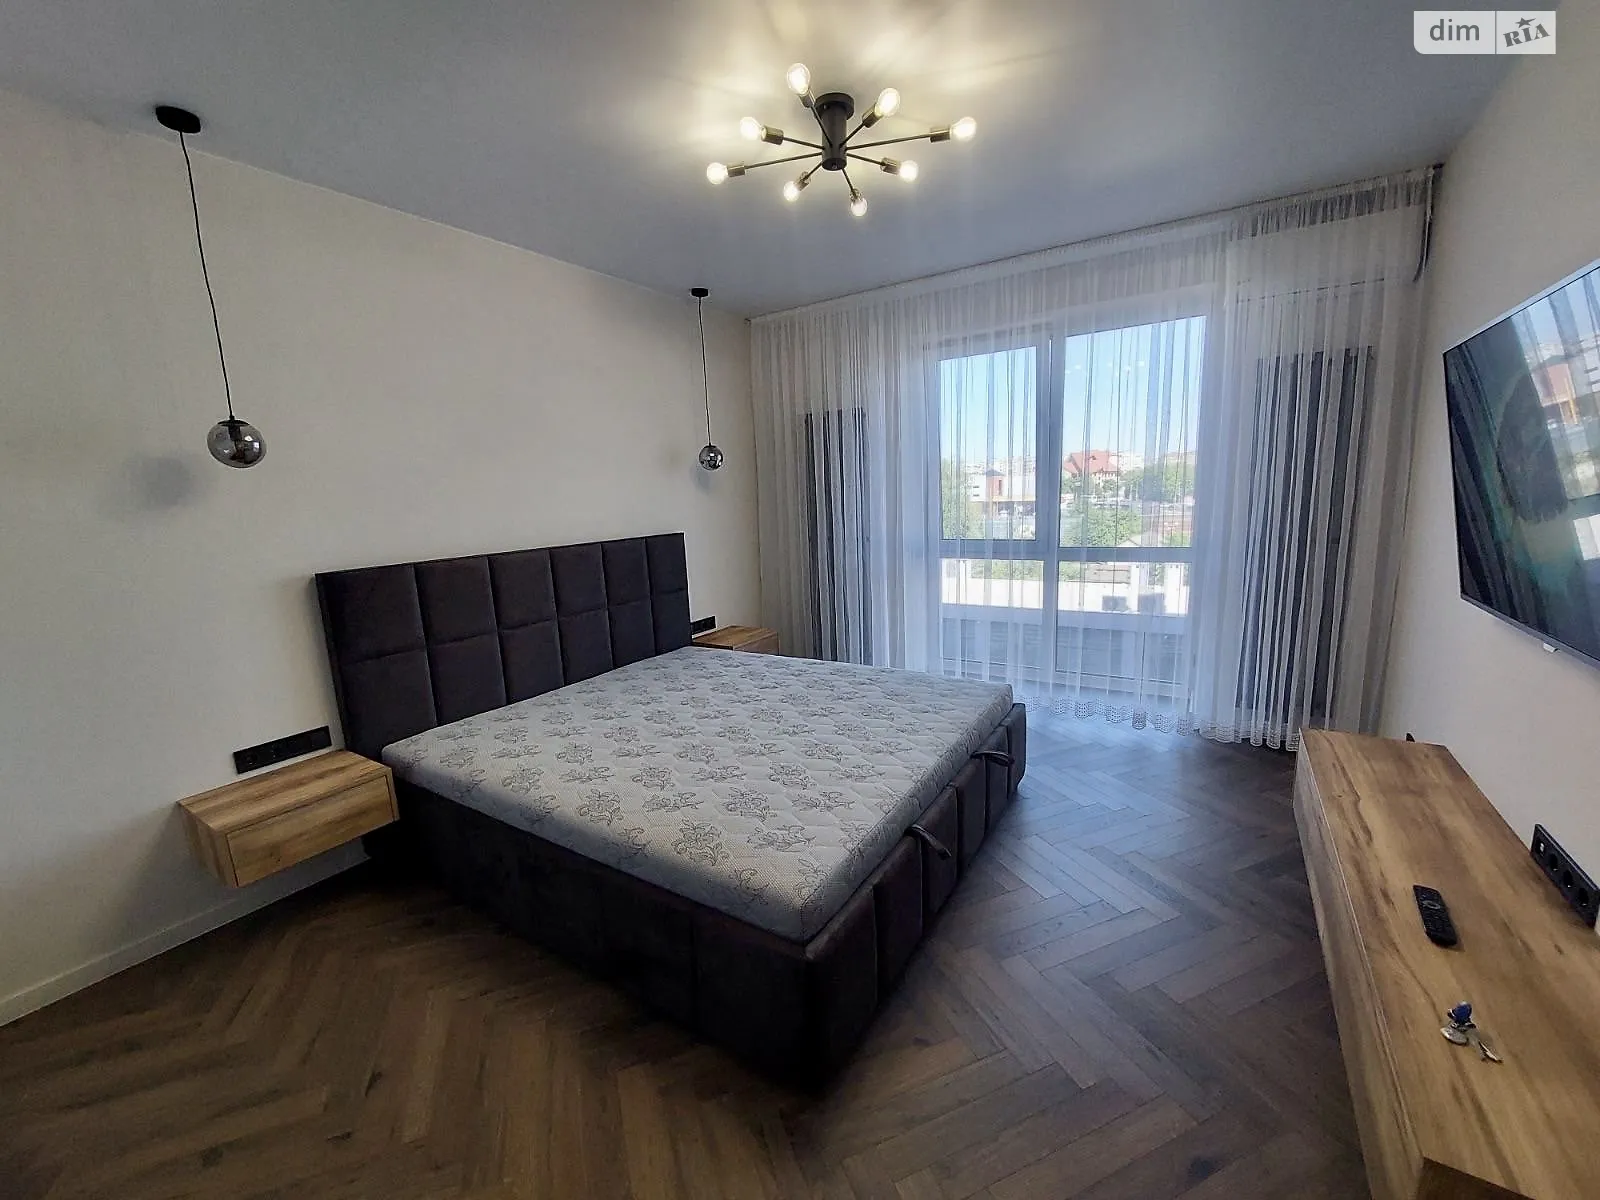 1-кімнатна квартира 52 кв. м у Луцьку, цена: 17000 грн